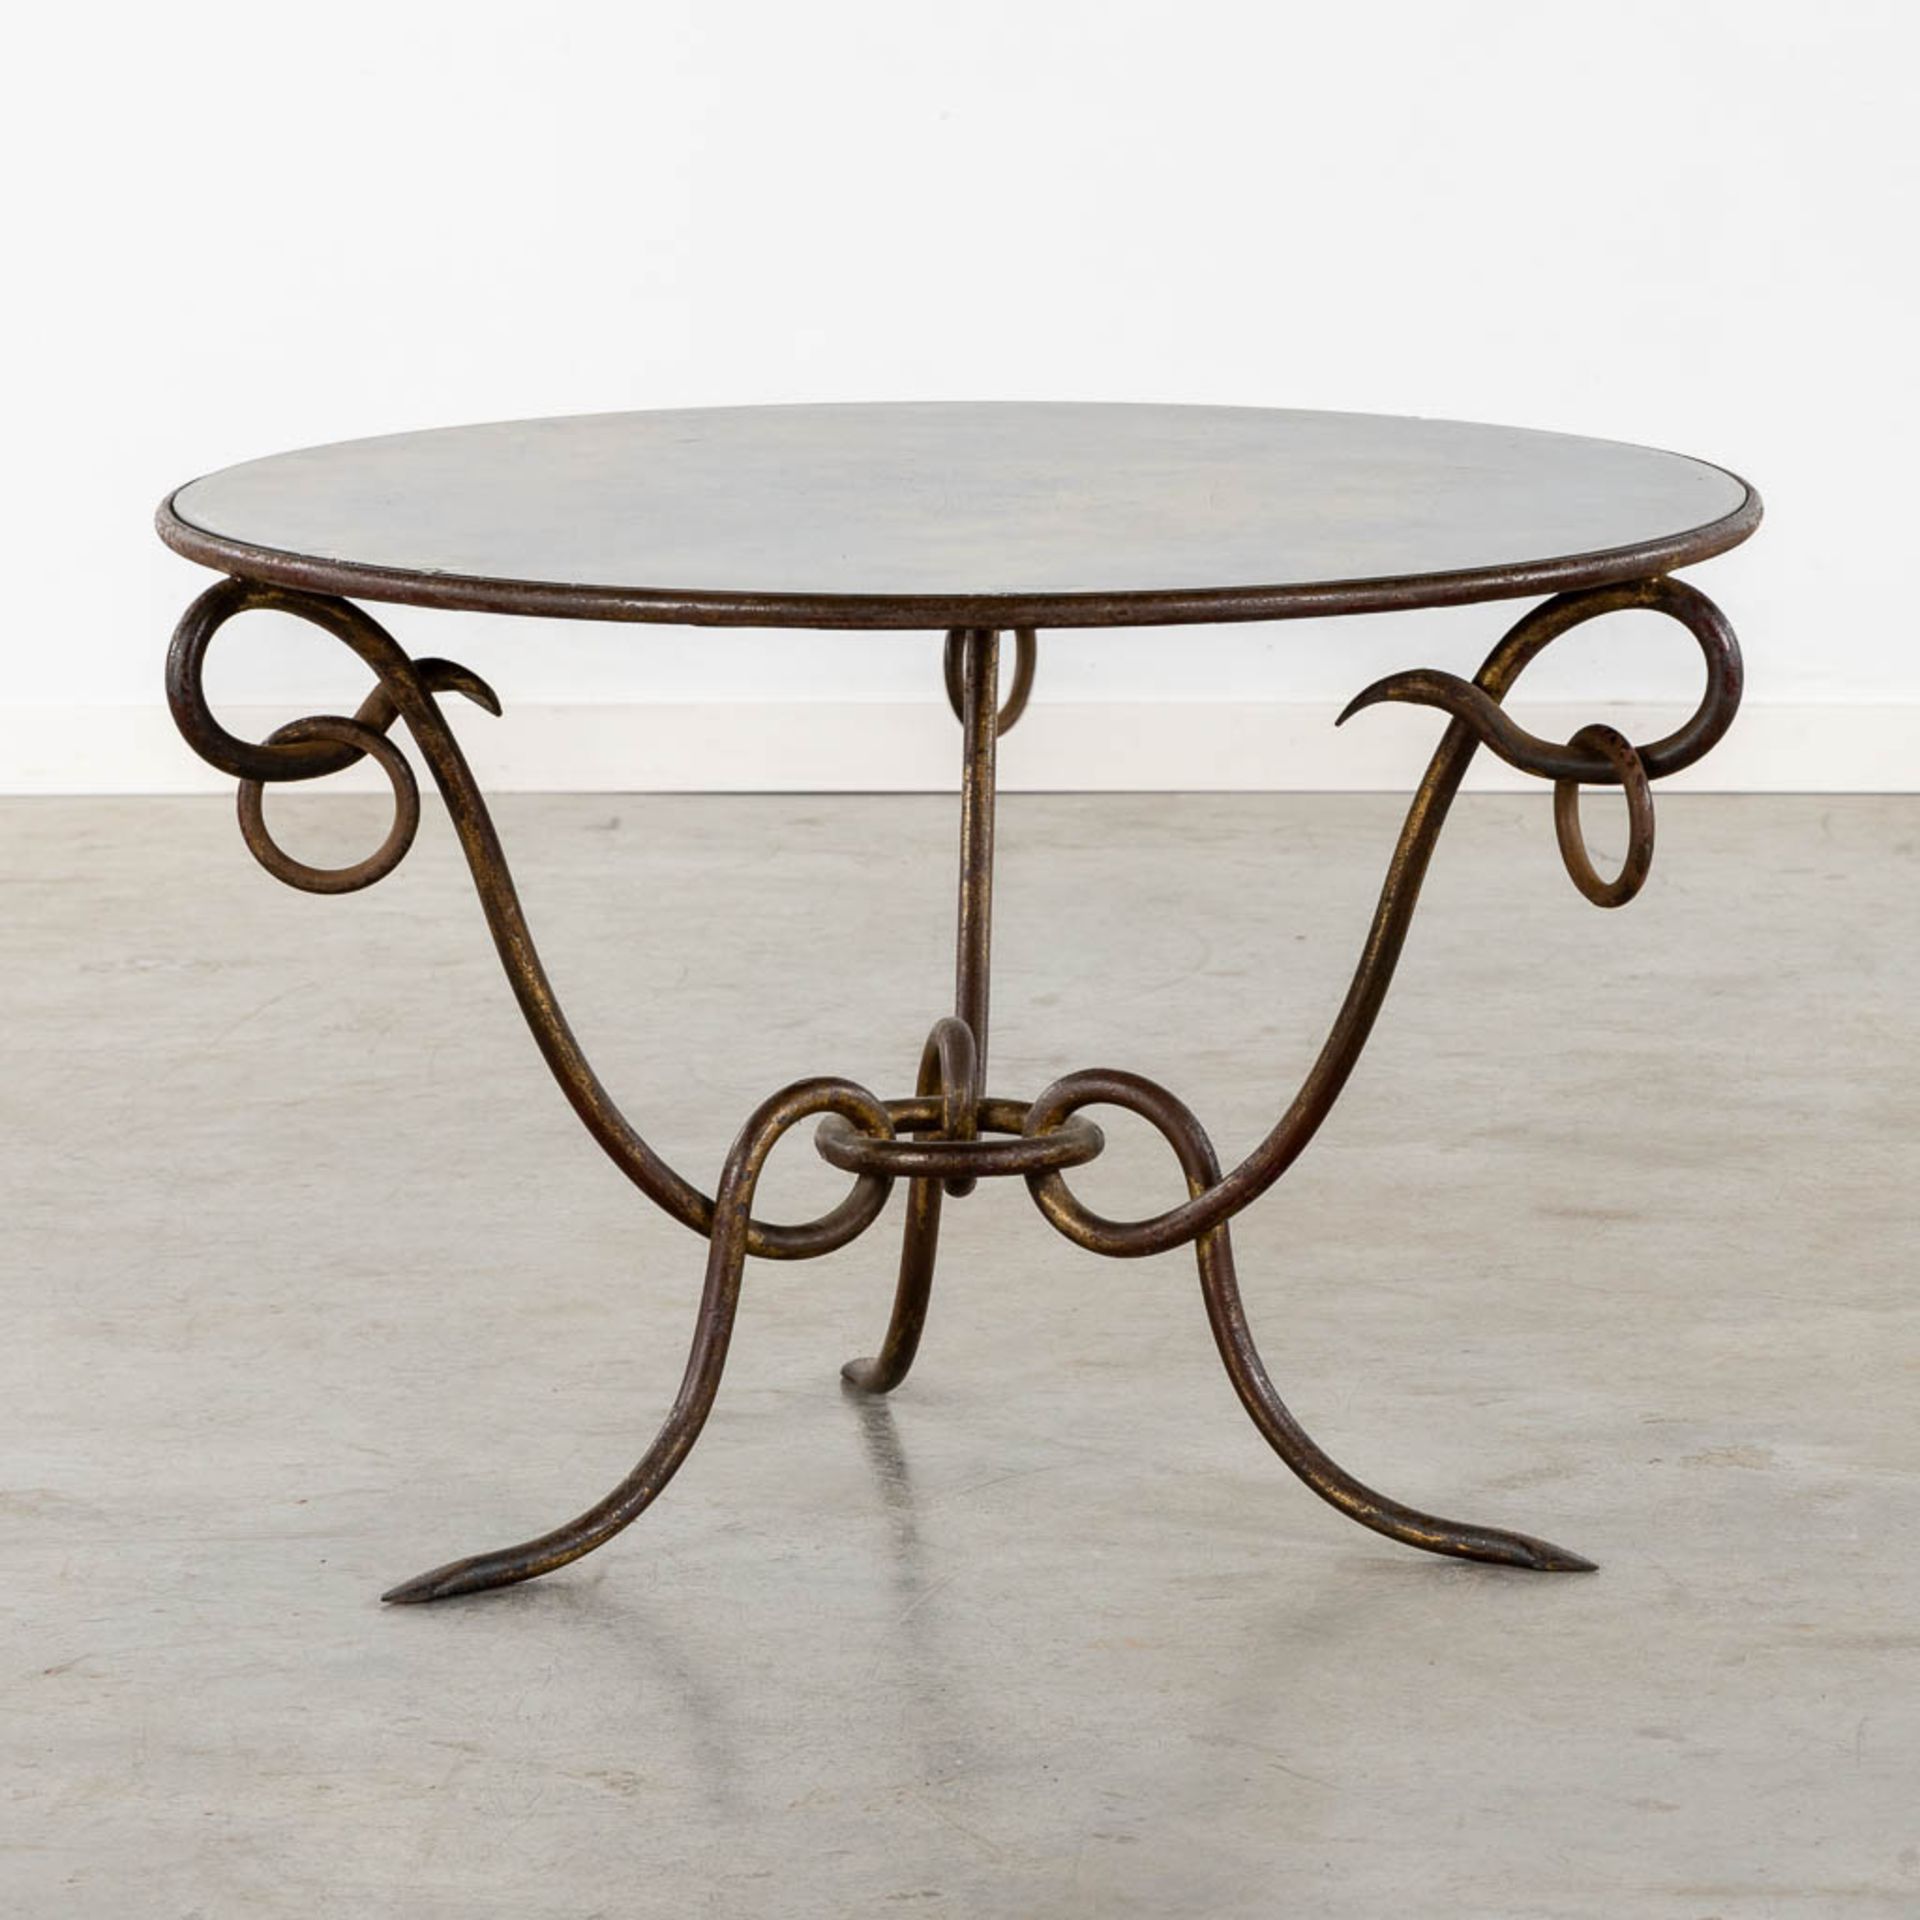 René DROUET (1899-1993) 'Round cofee table' (H:53 x D:84 cm) - Bild 3 aus 11